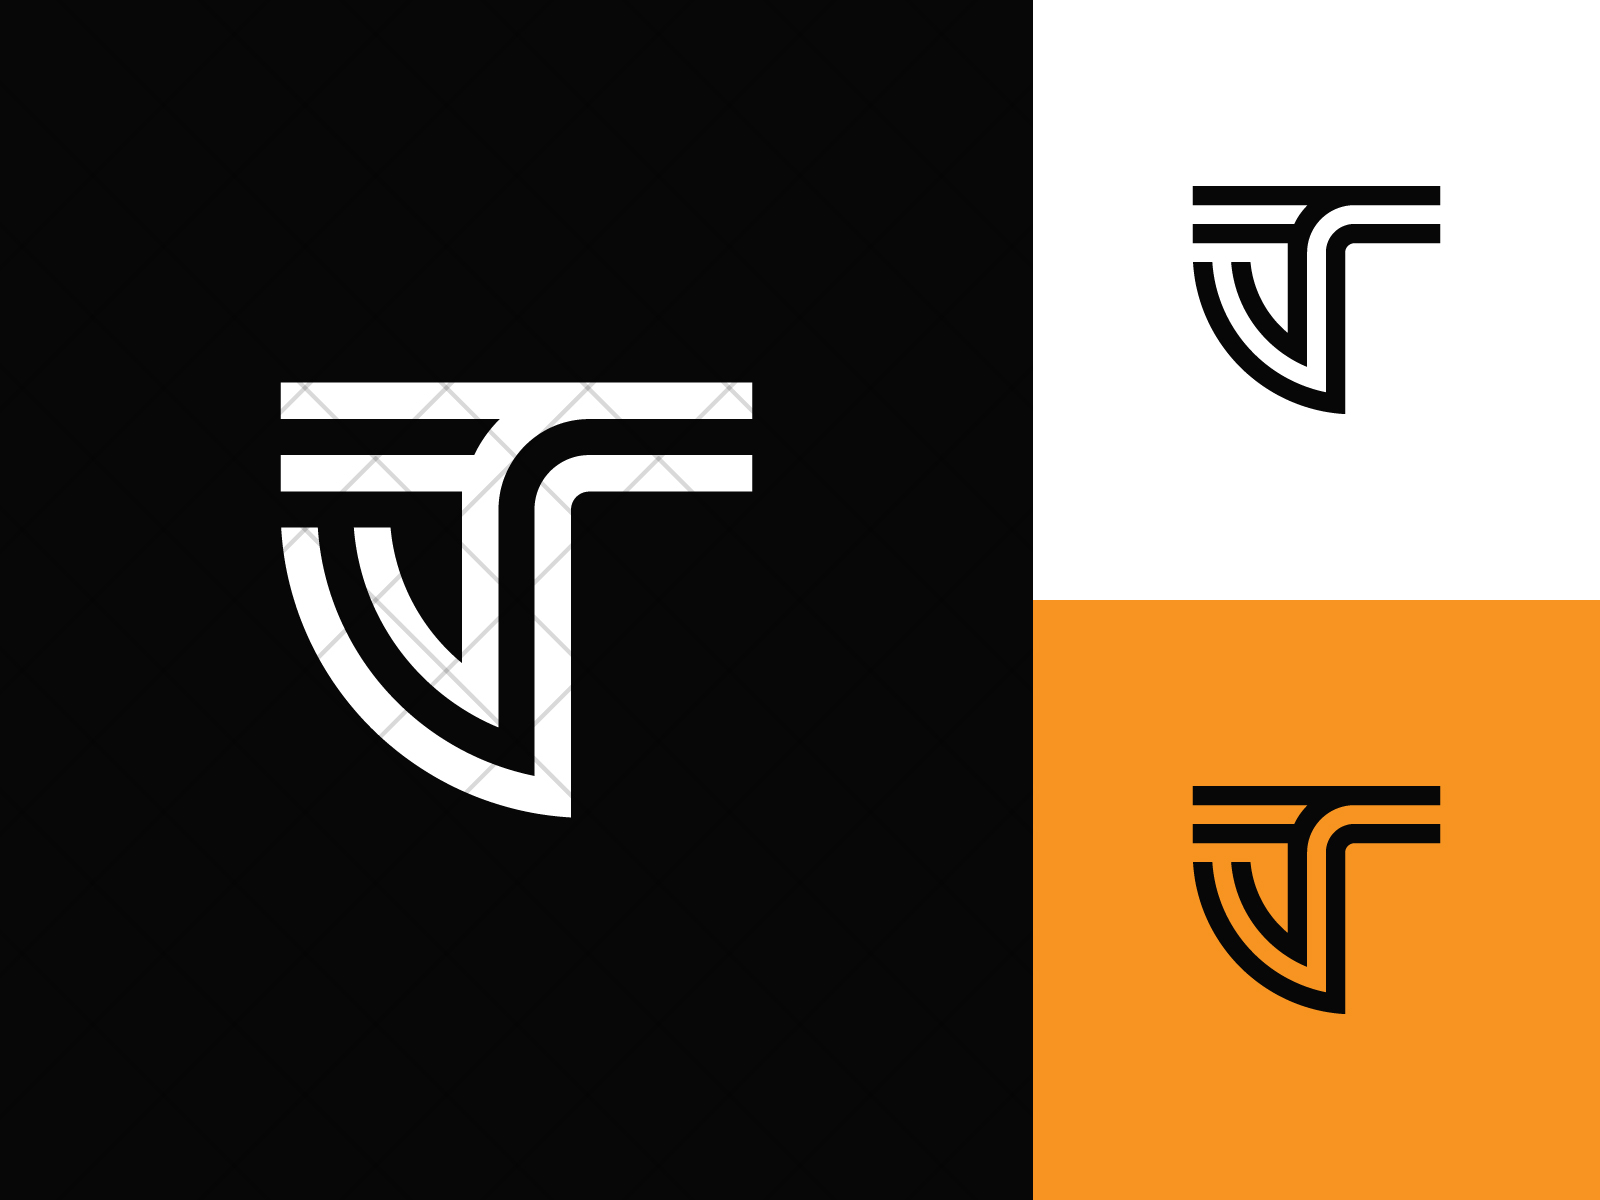 Letter tj logo design template t j Royalty Free Vector Image